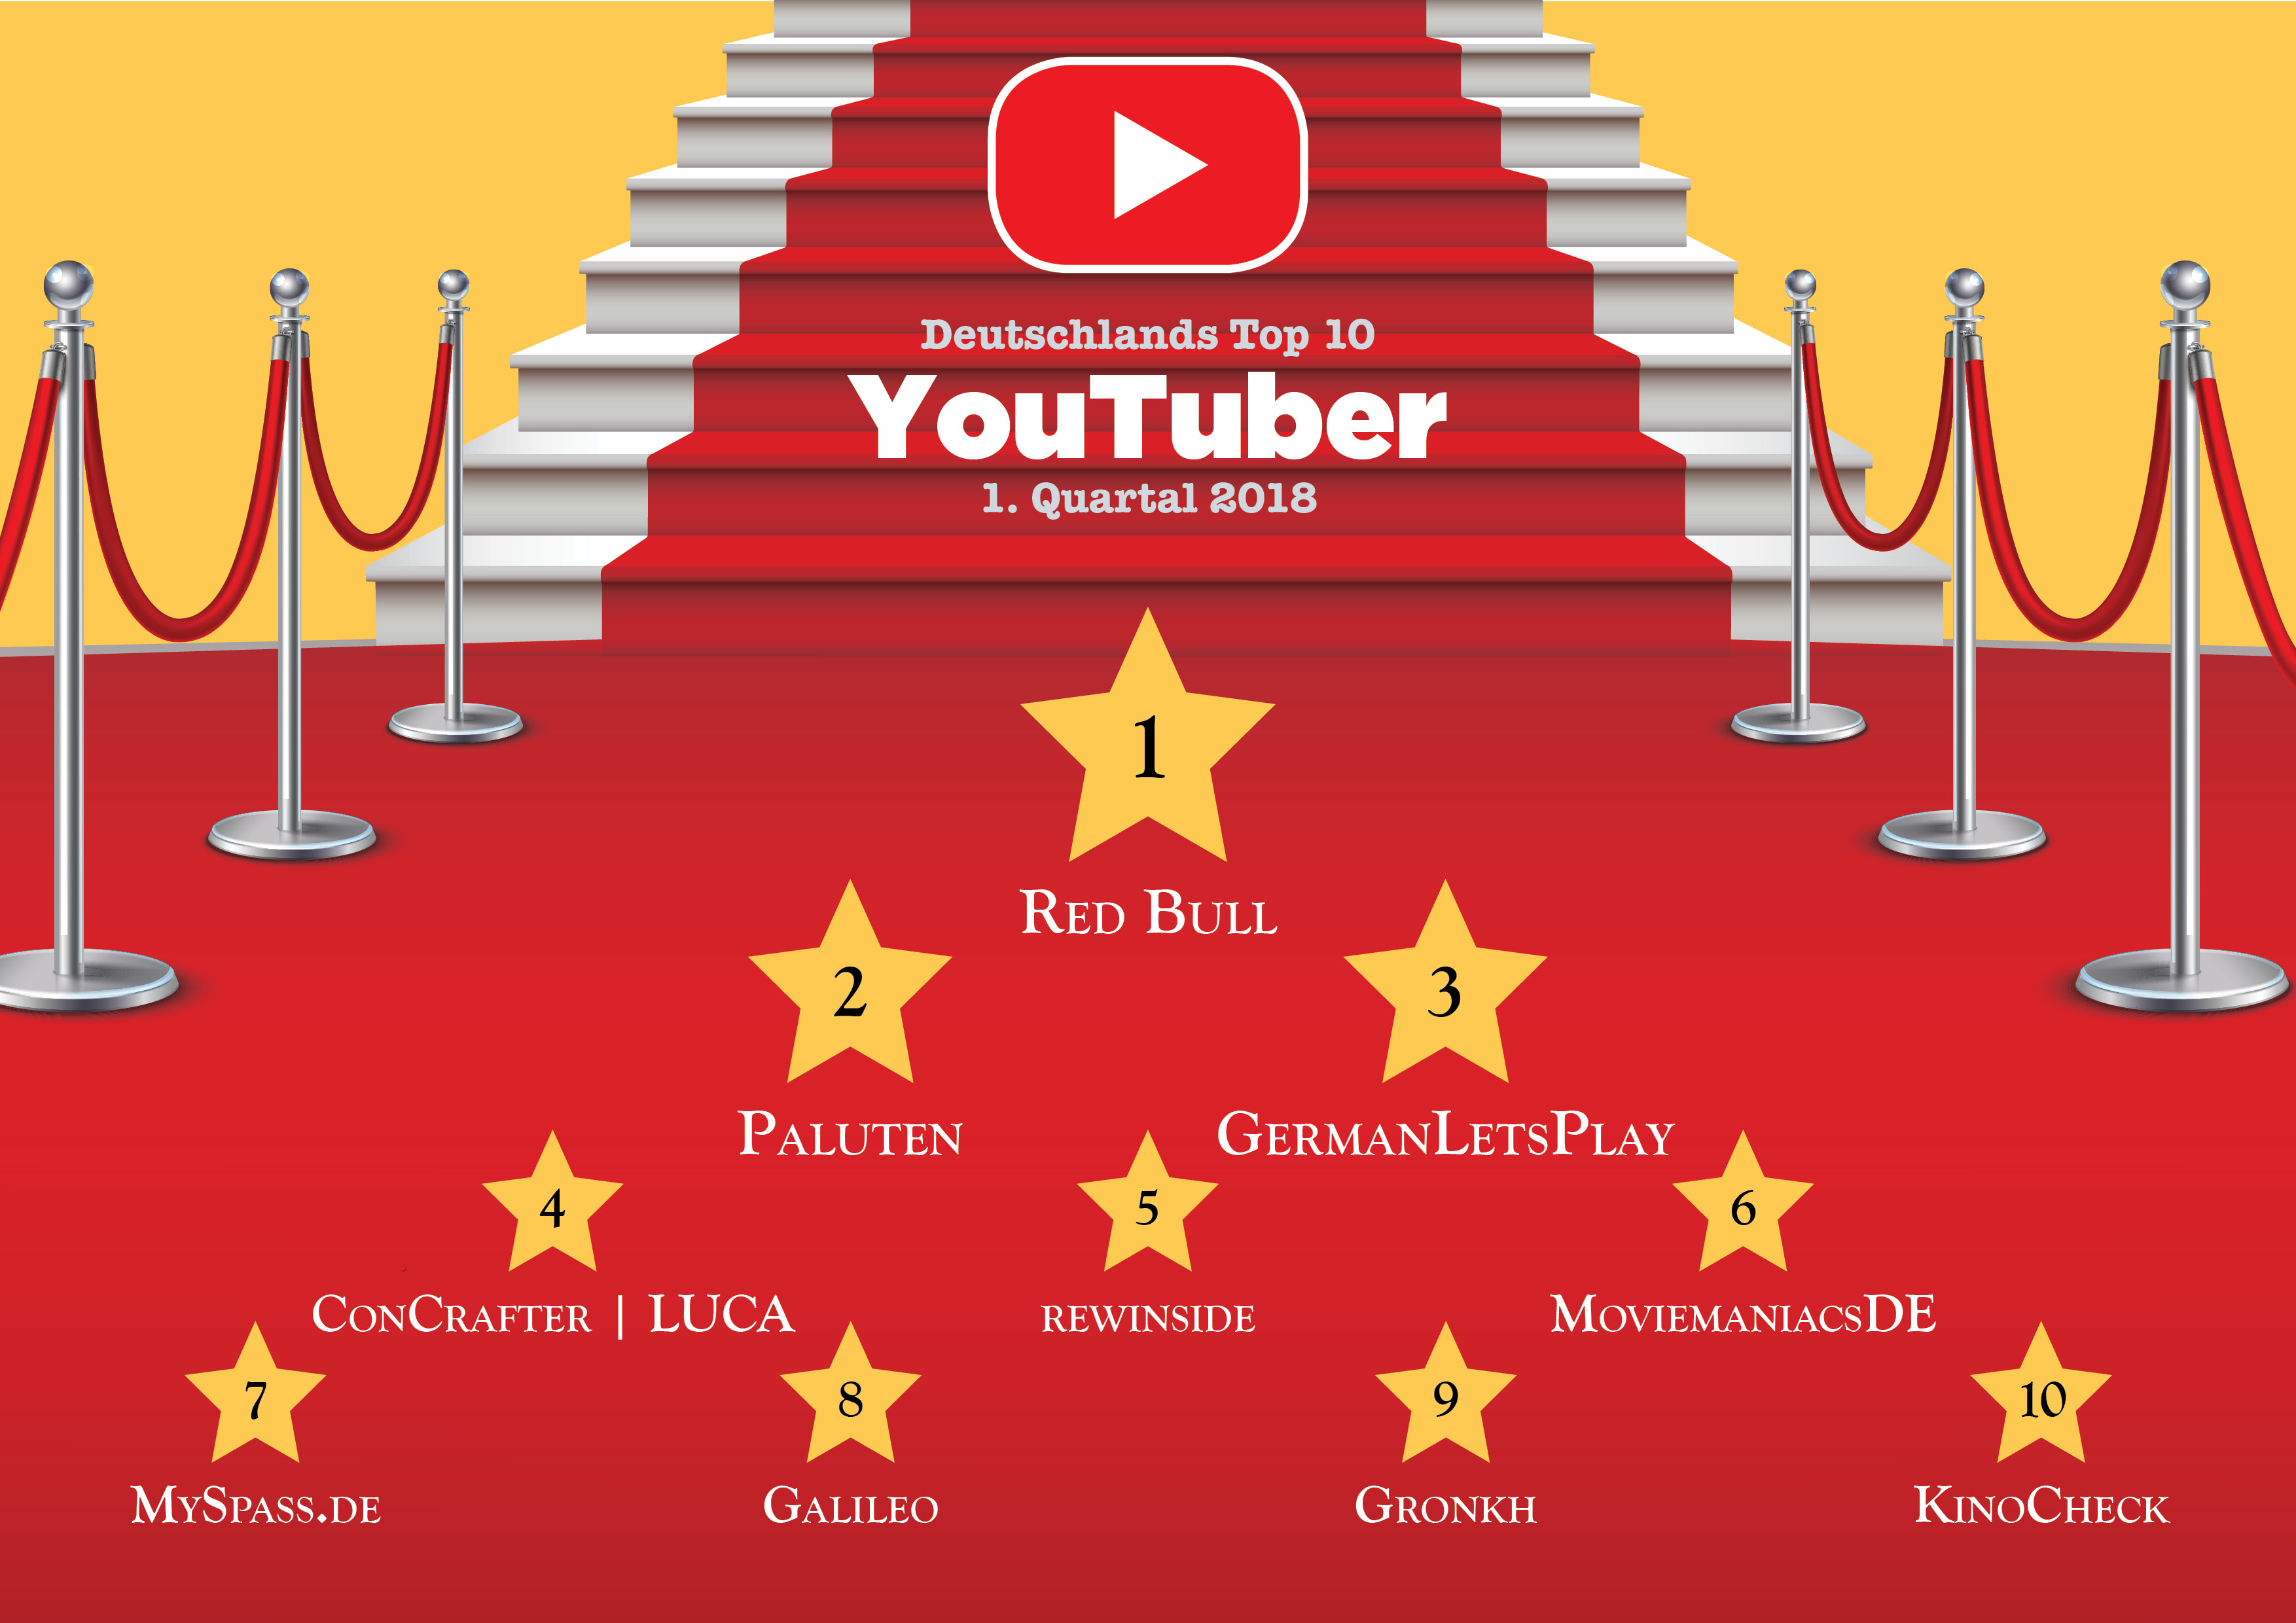 Top YouTuber 2018